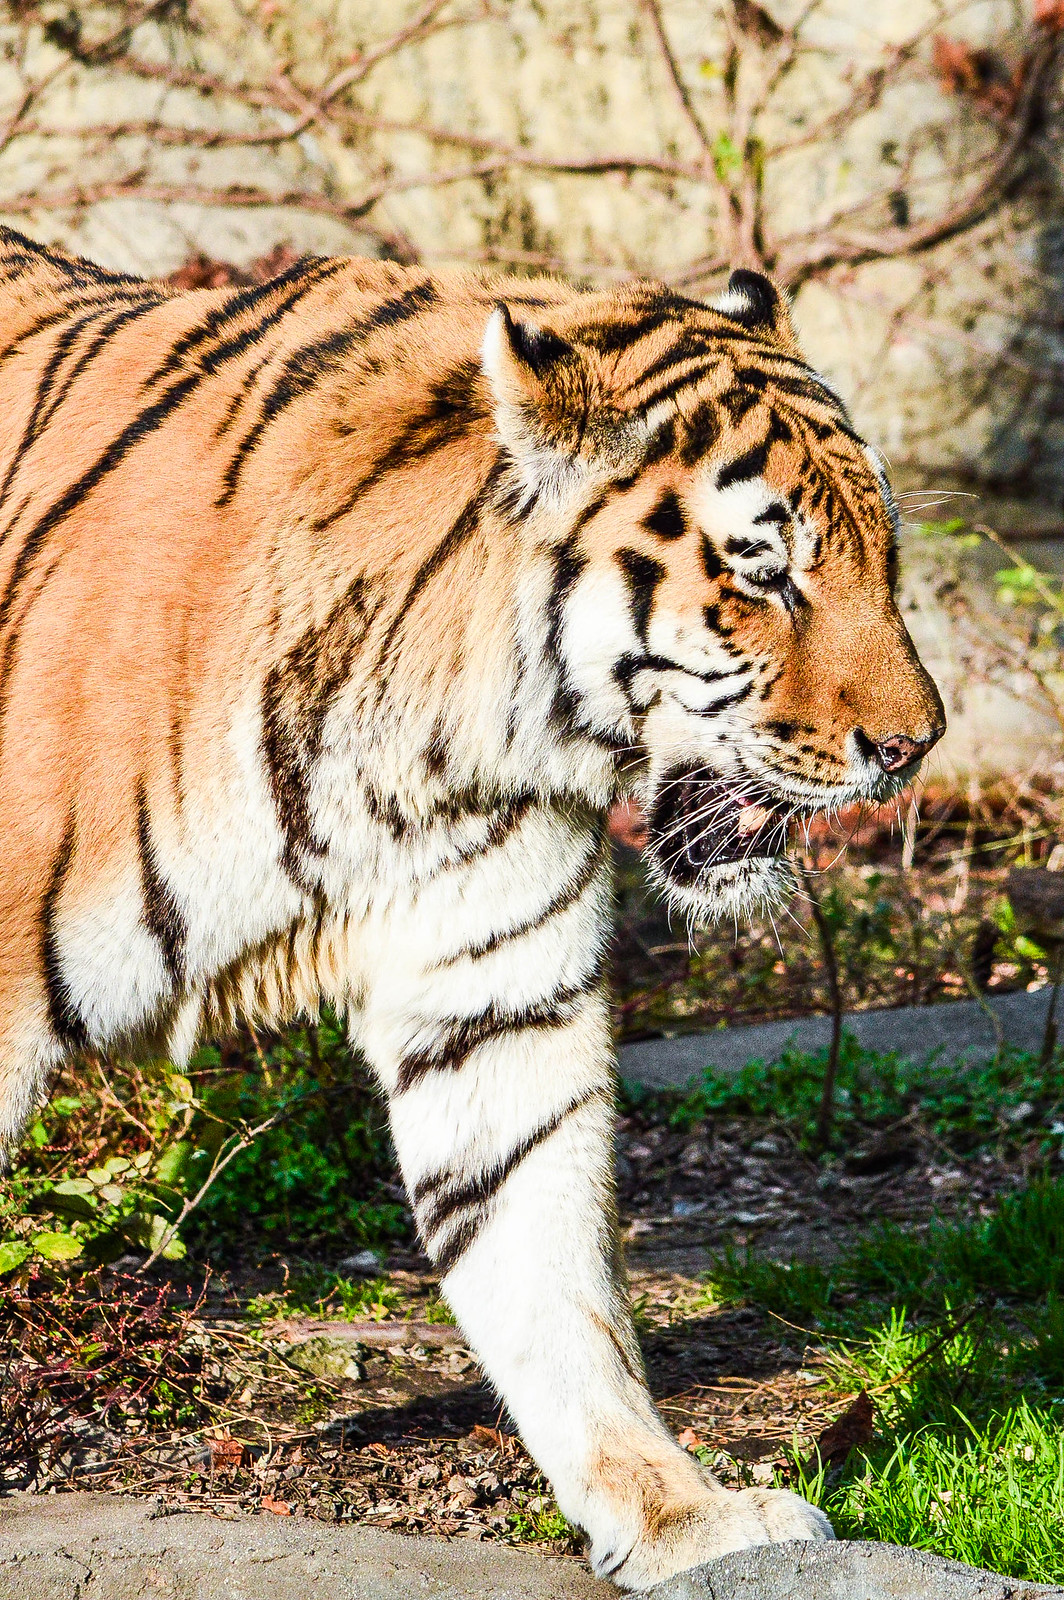 Tiger at Tennōji Zoo, Osaka